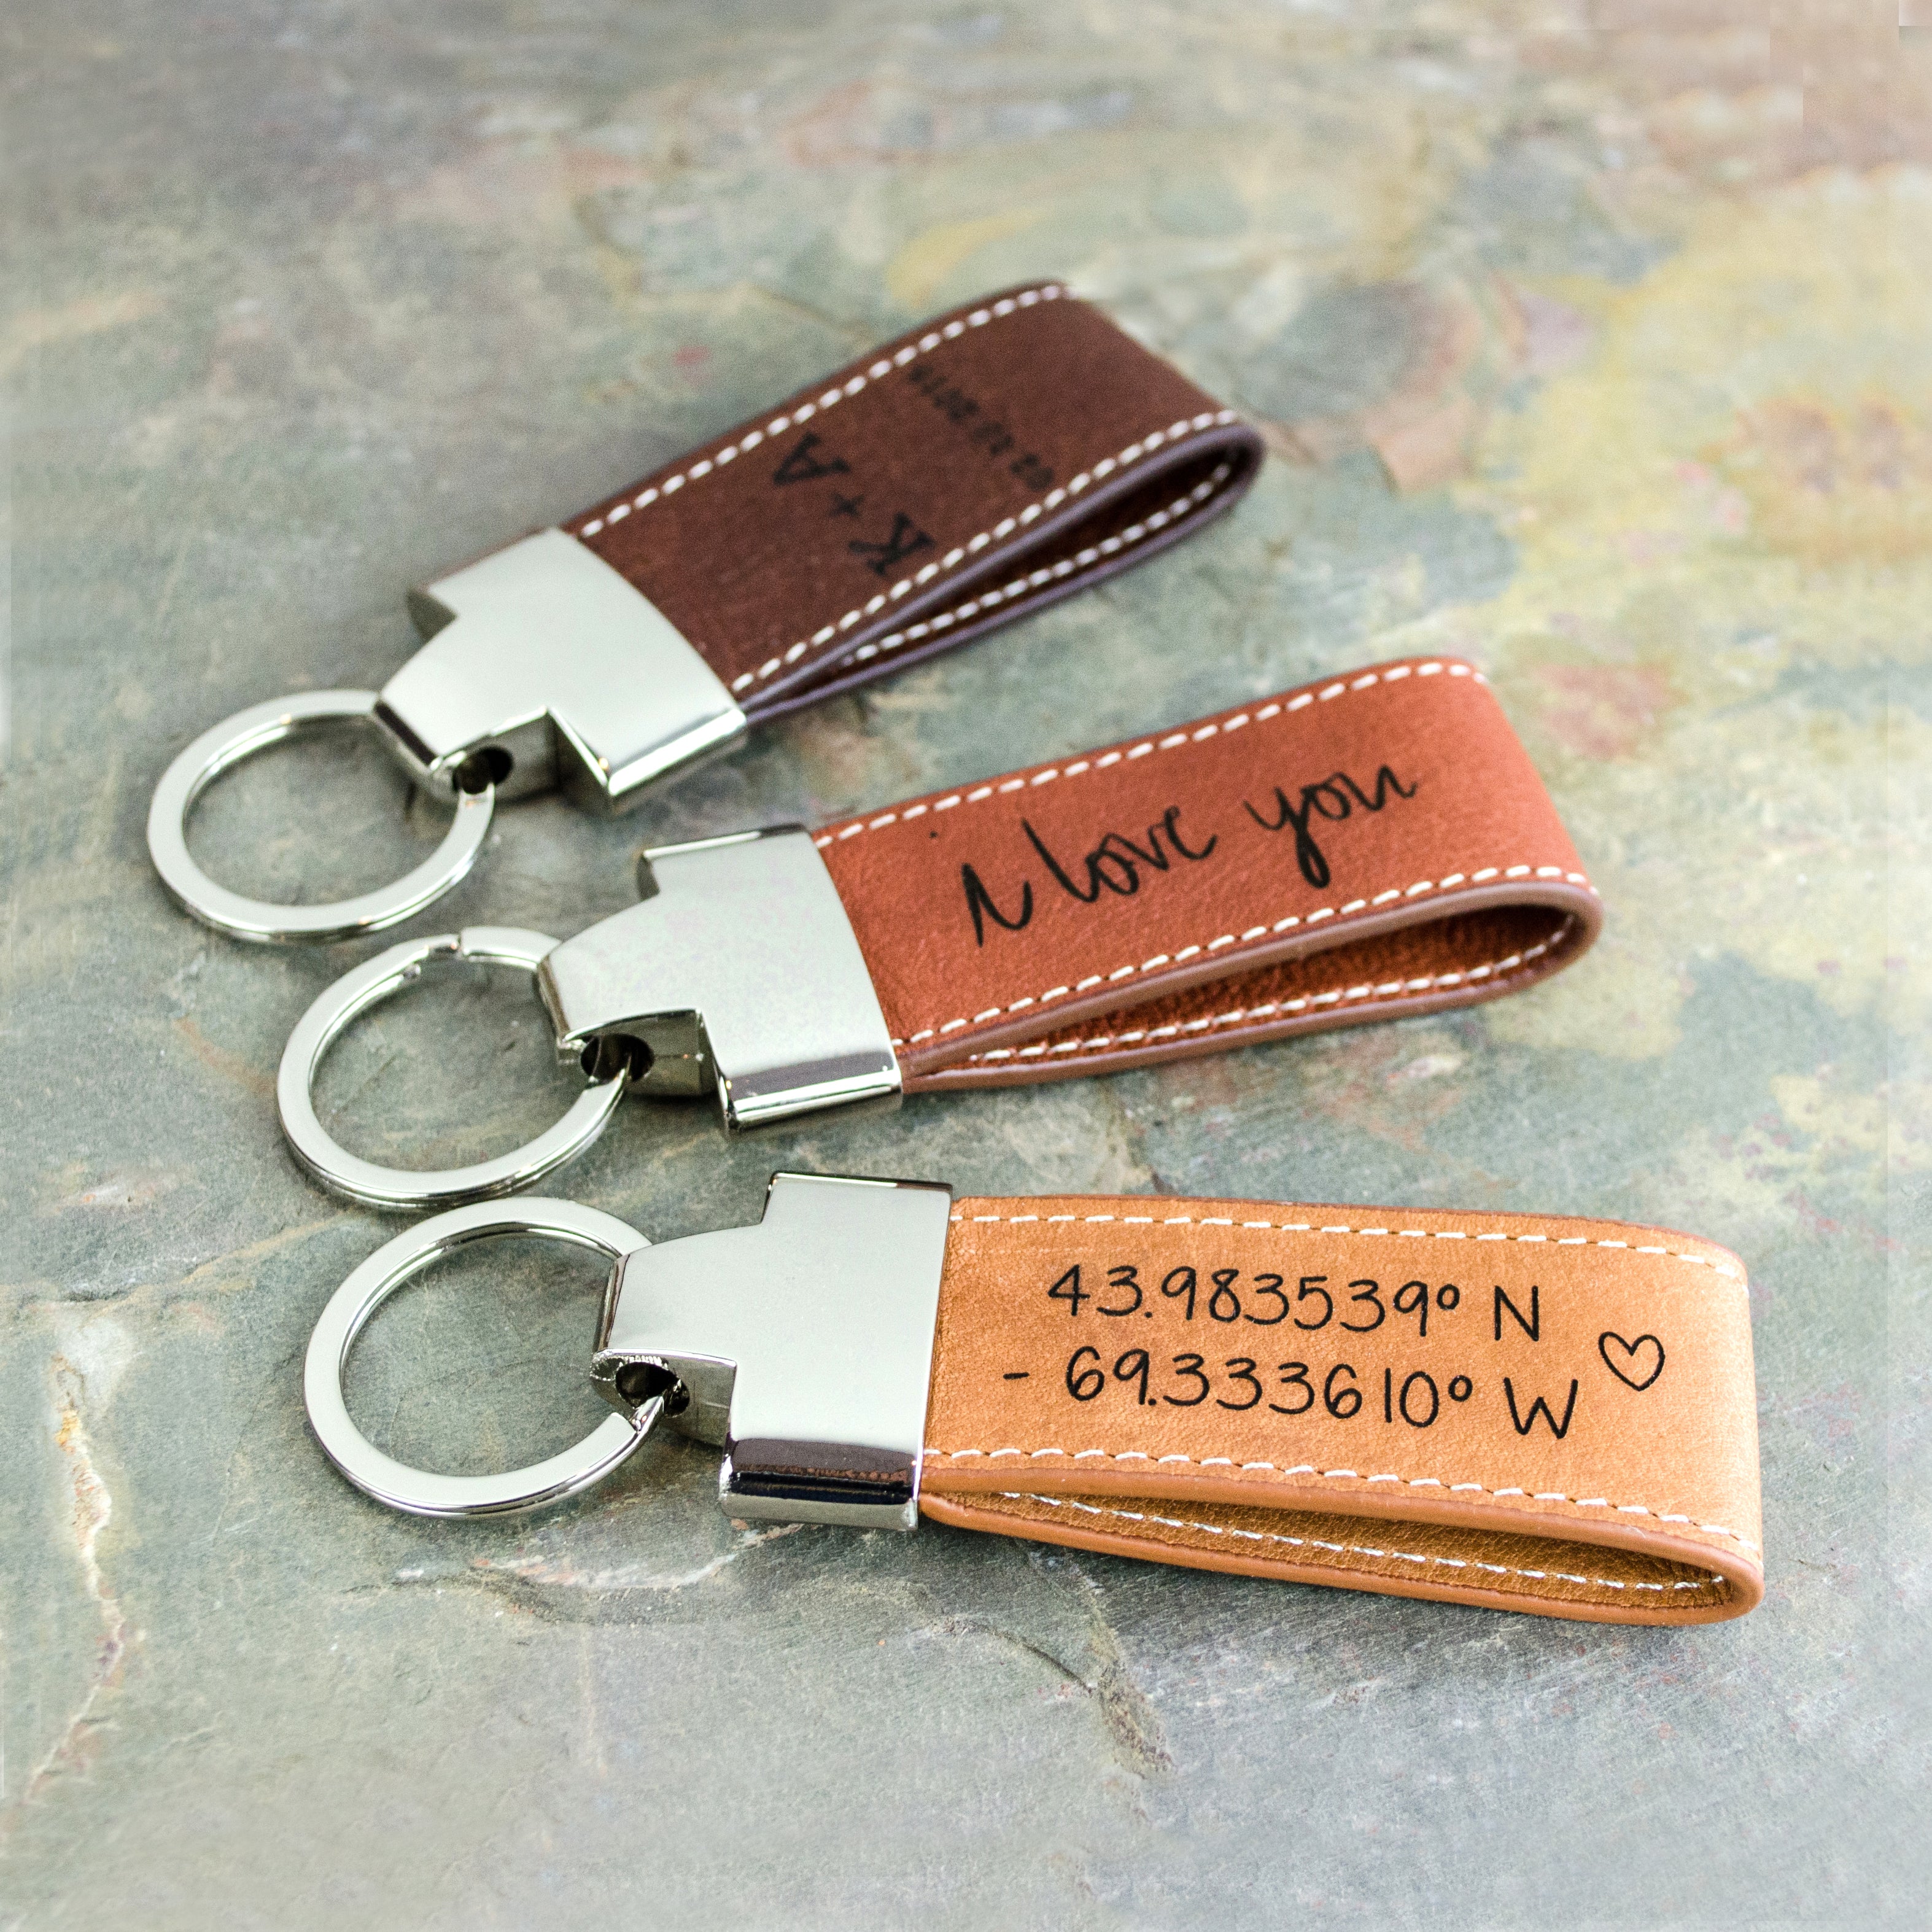 Create Your Own Key Chain - Custom Made Key Rings